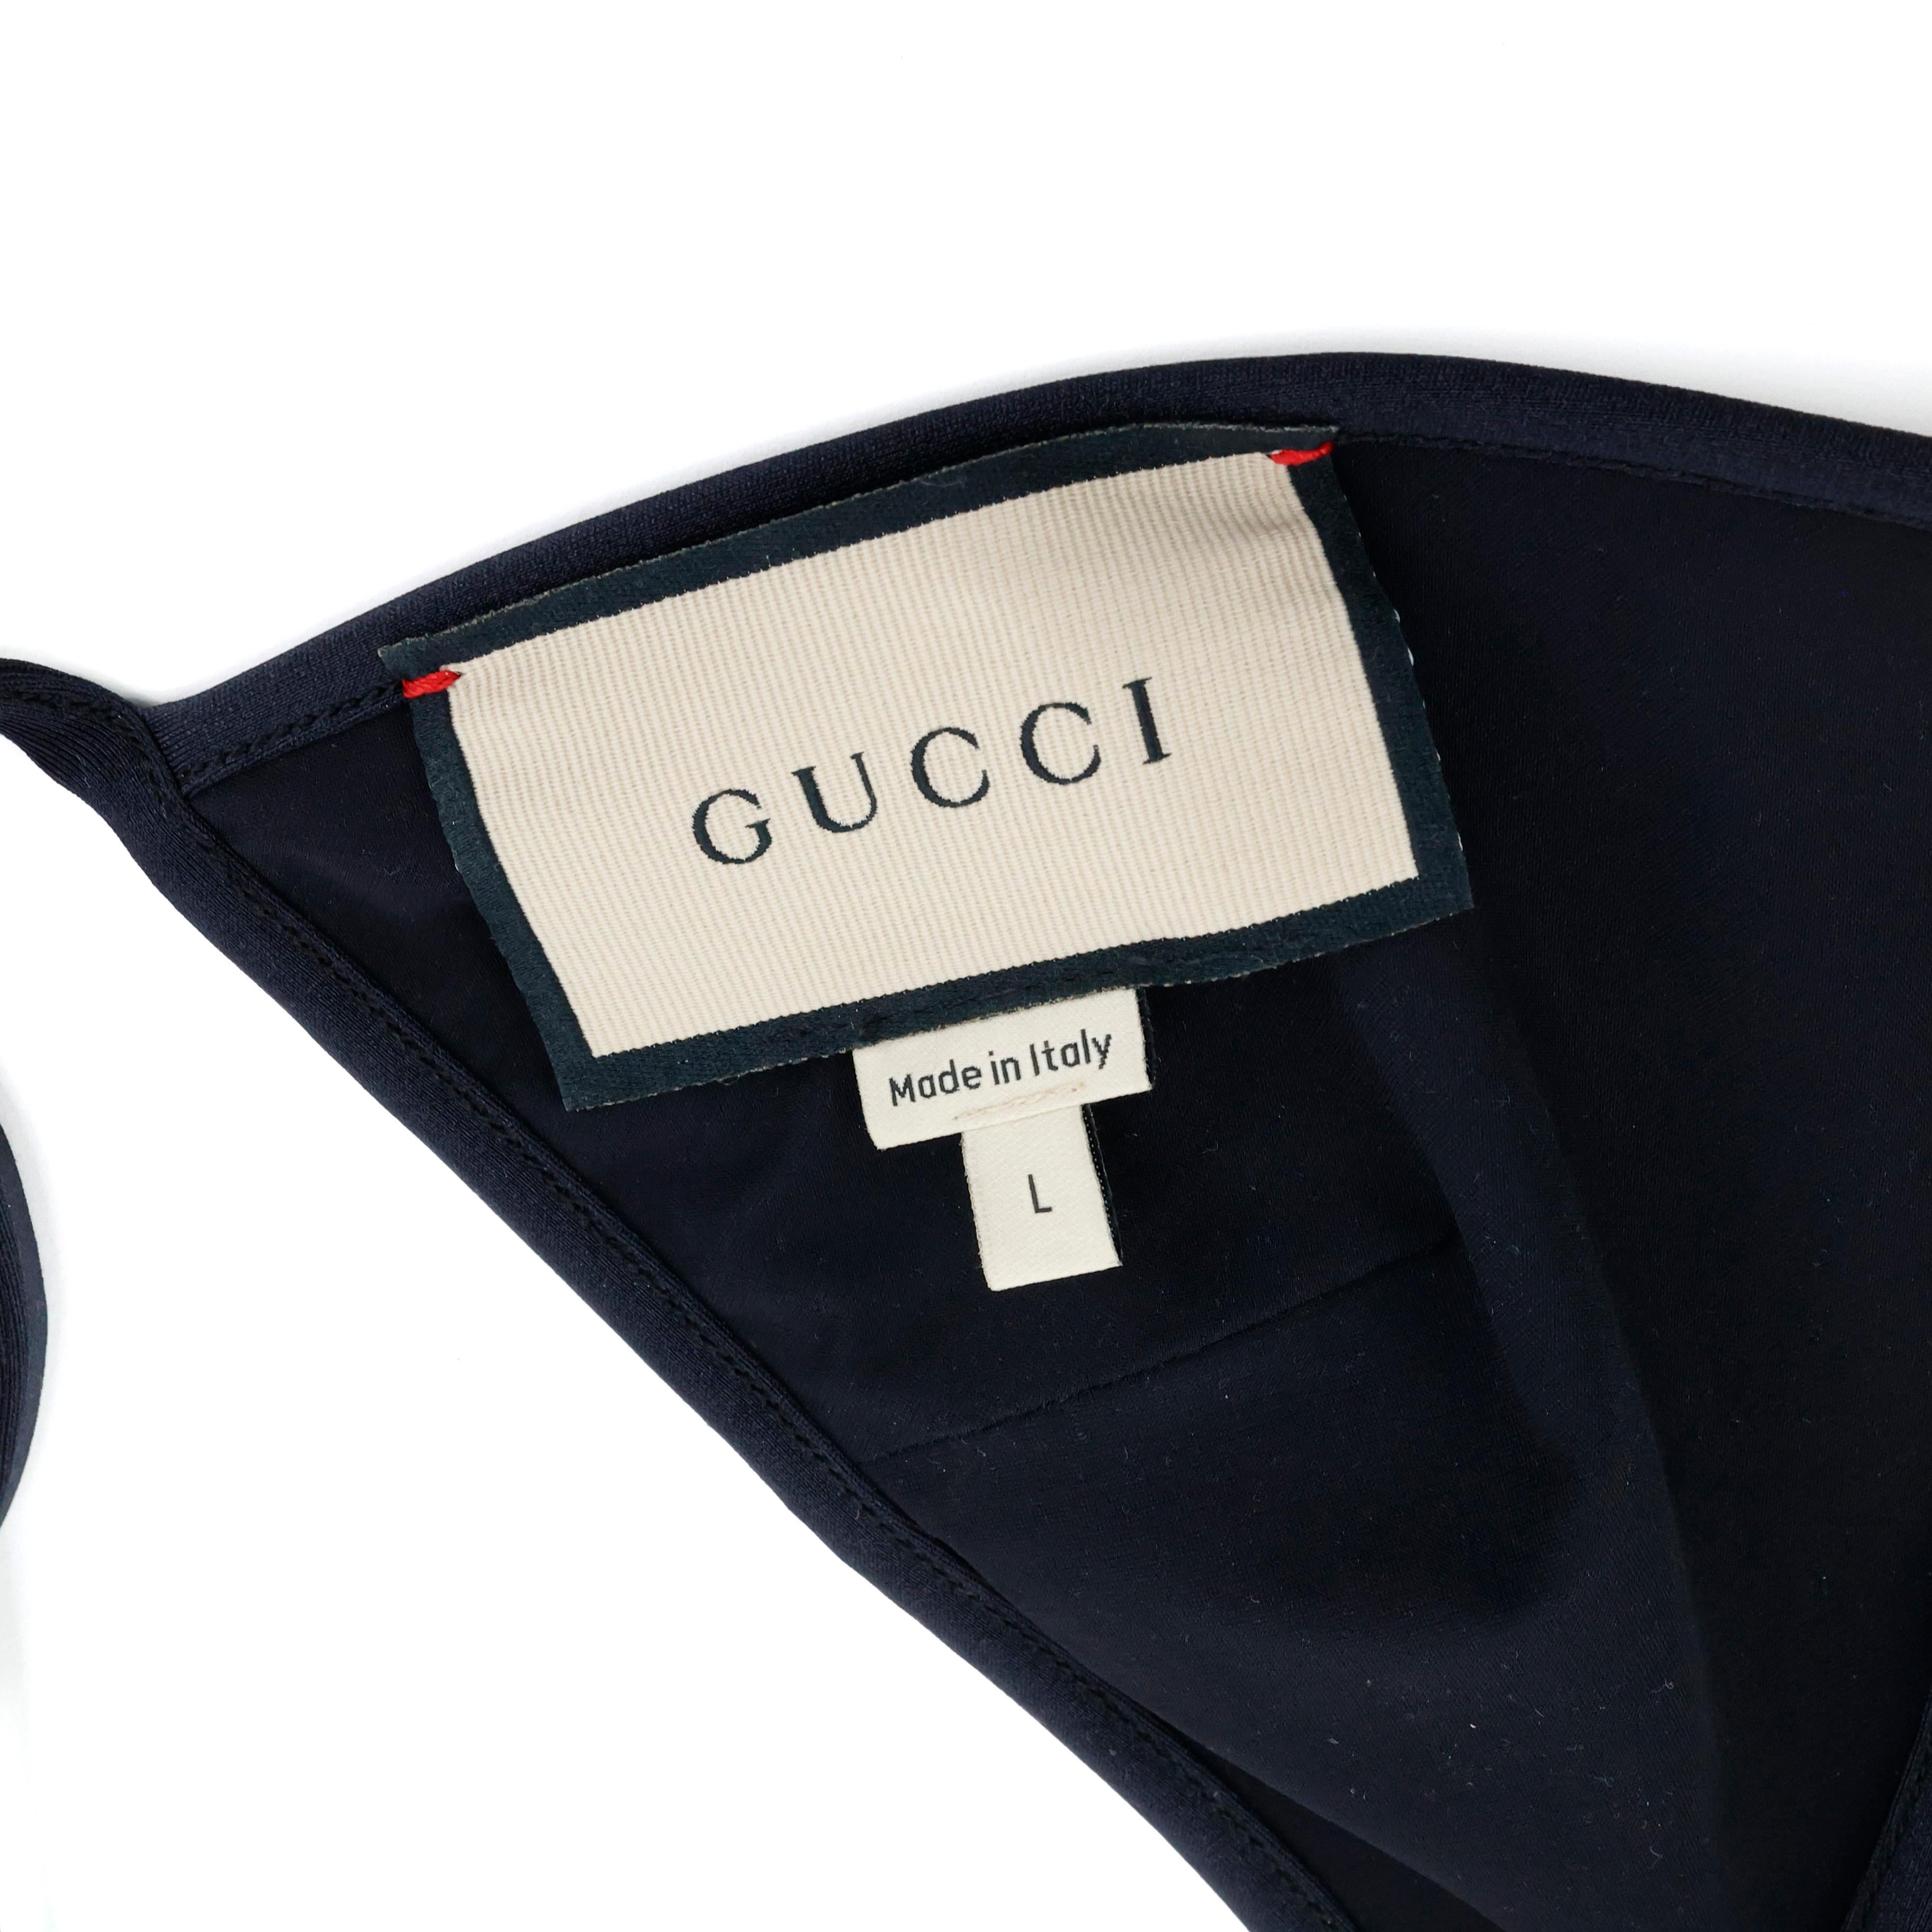 Gucci G string thong / bikini Crystal embellished 1